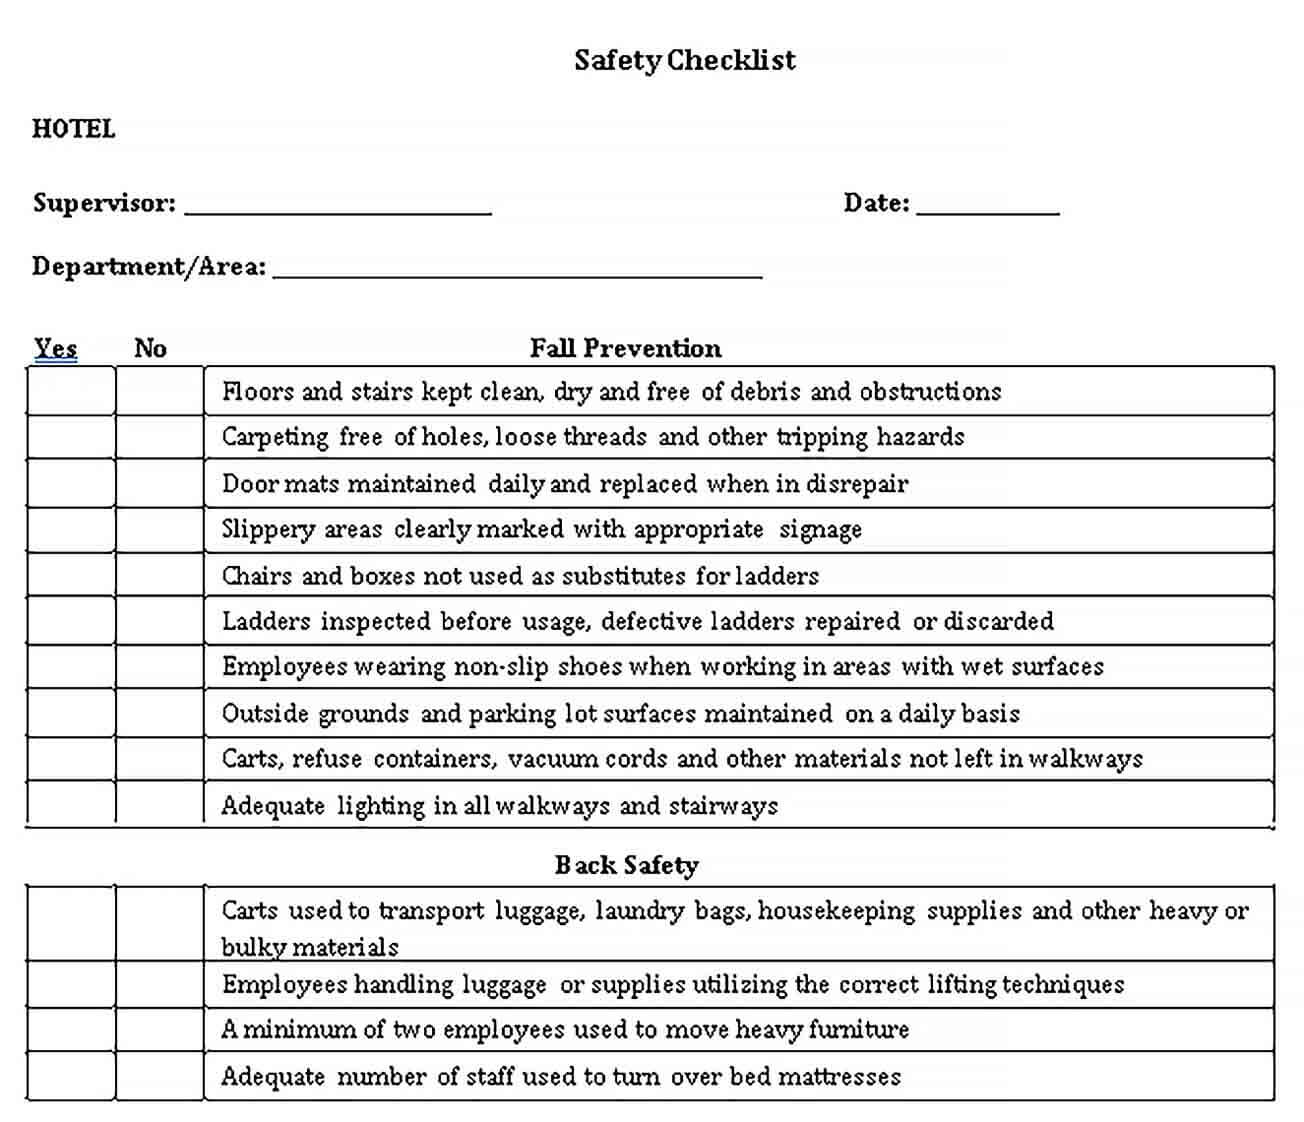 Sample Hotel Saftey Checklist Template